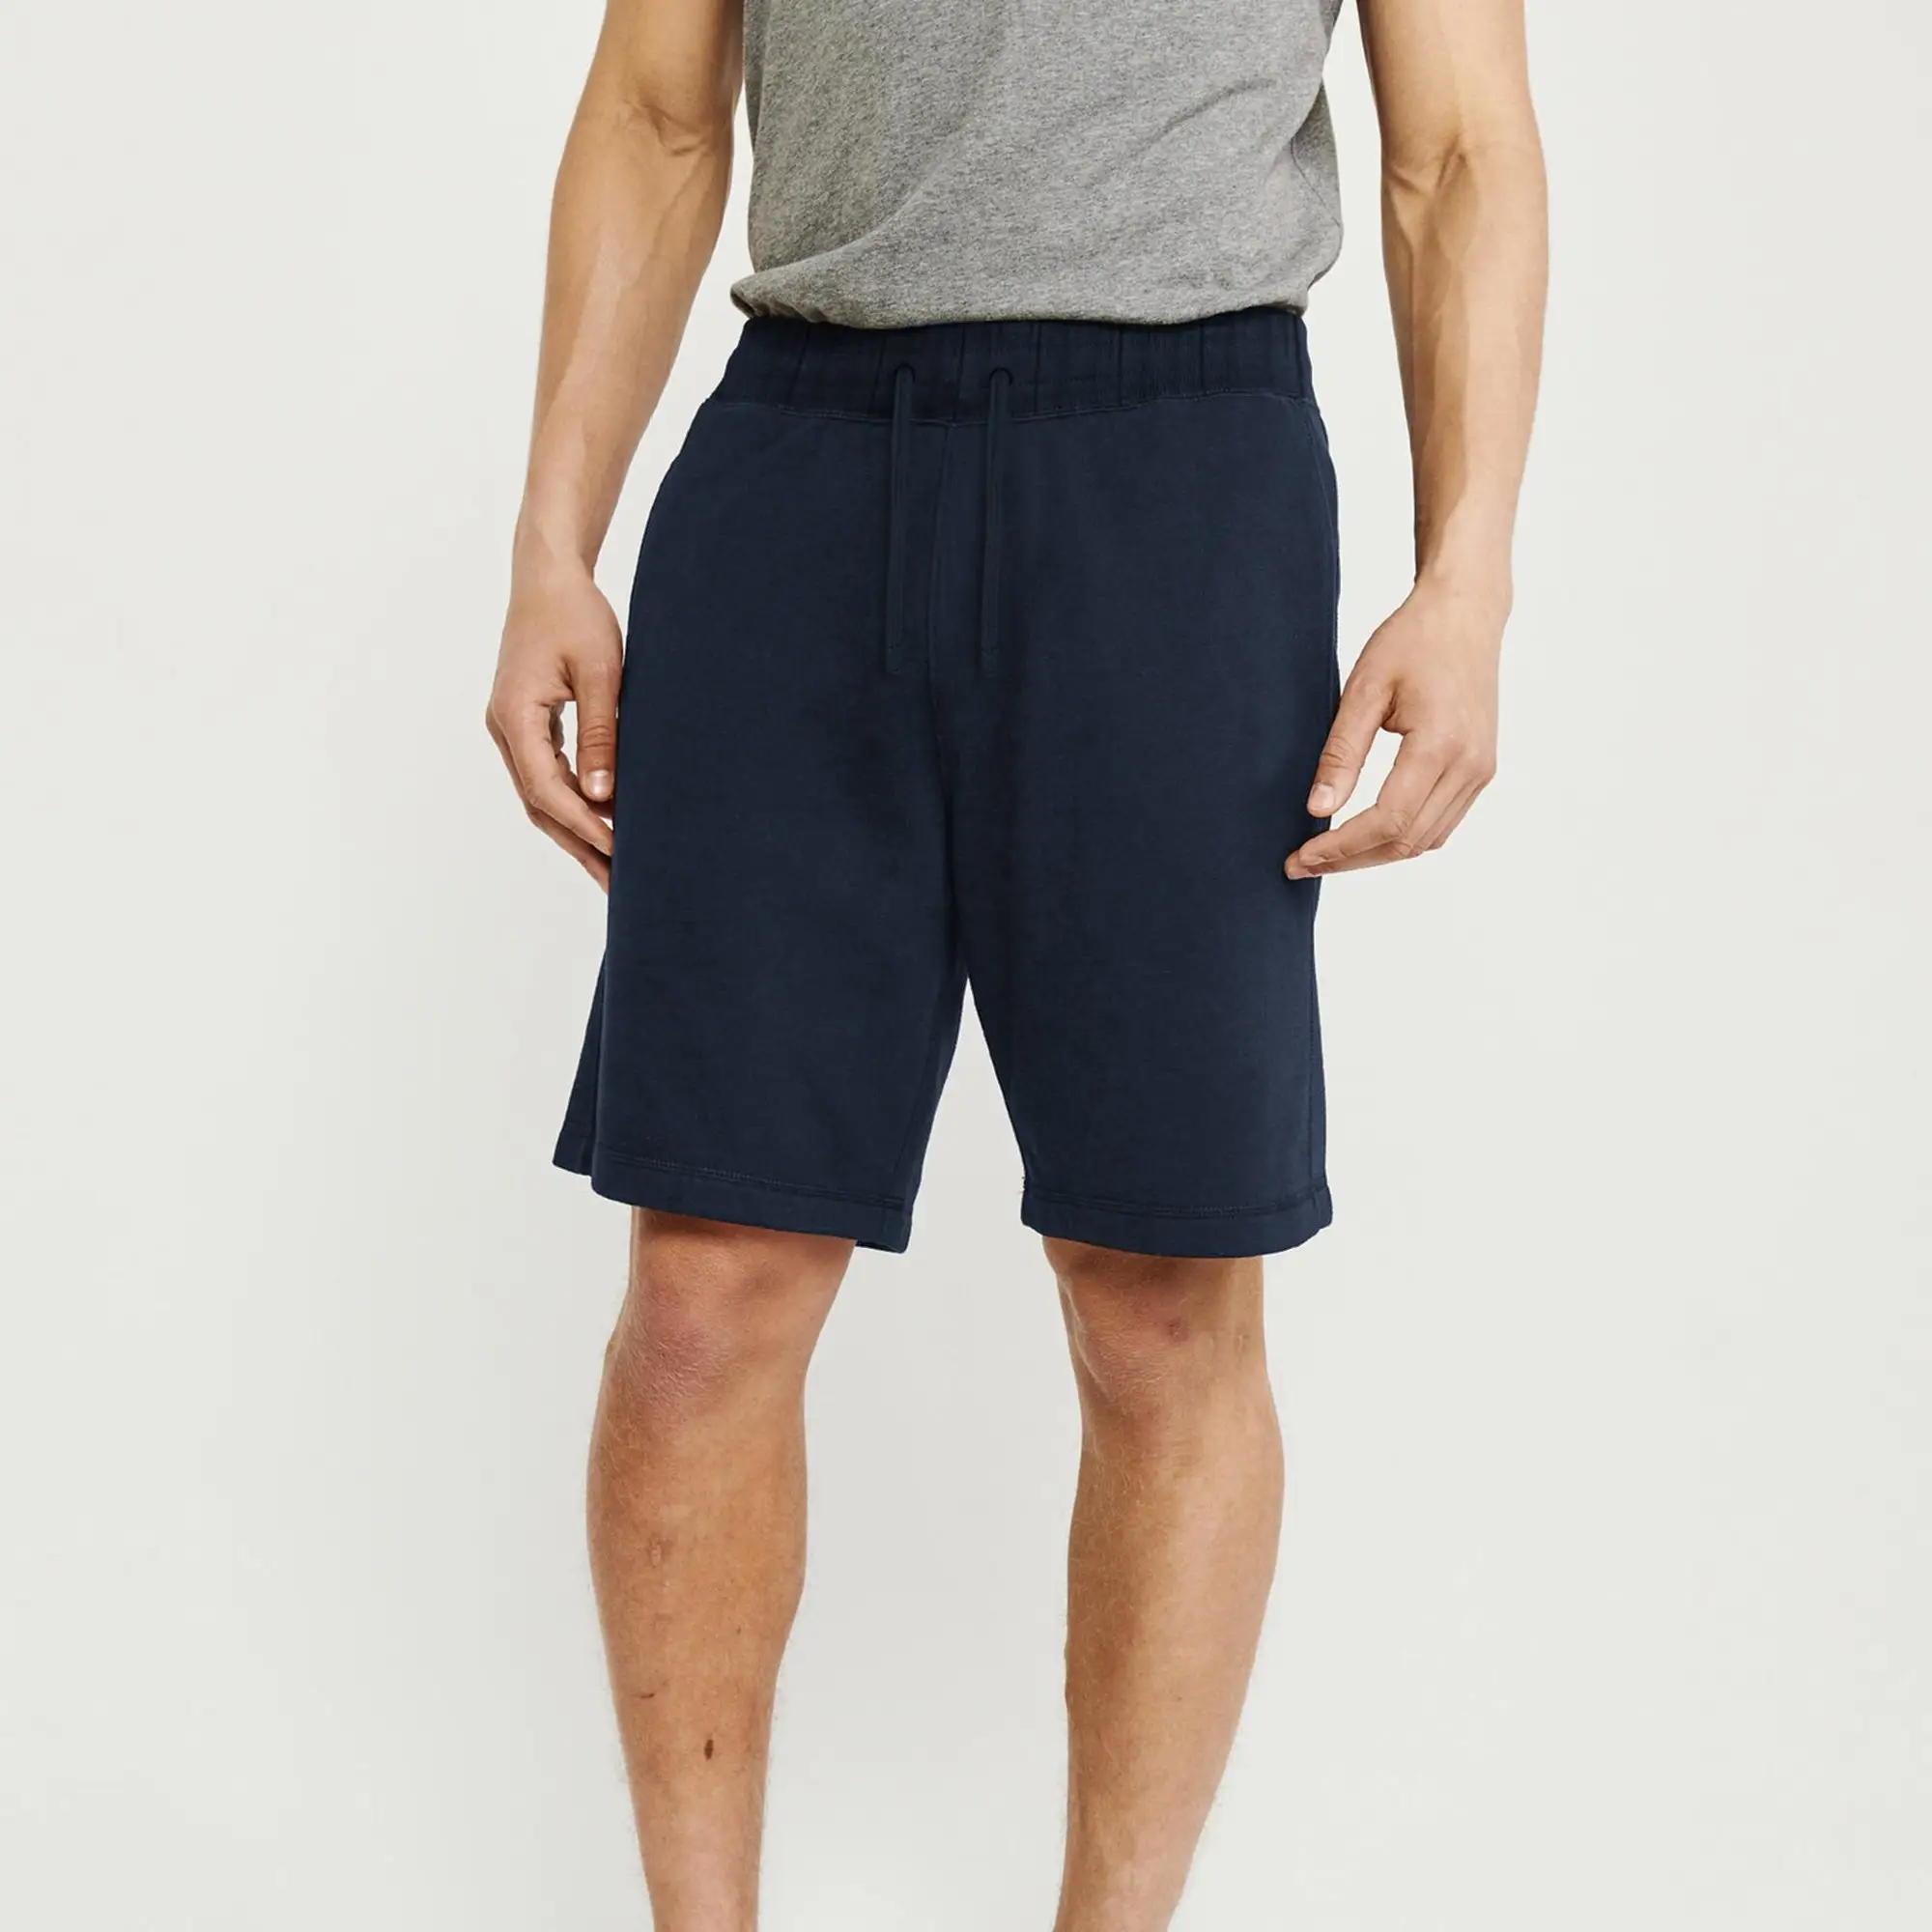 Custom Stylish Fishing Shorts Pants High Street Zipper Pocket Style Gym Sport Athletic Boxer Basketball Shorts For Men